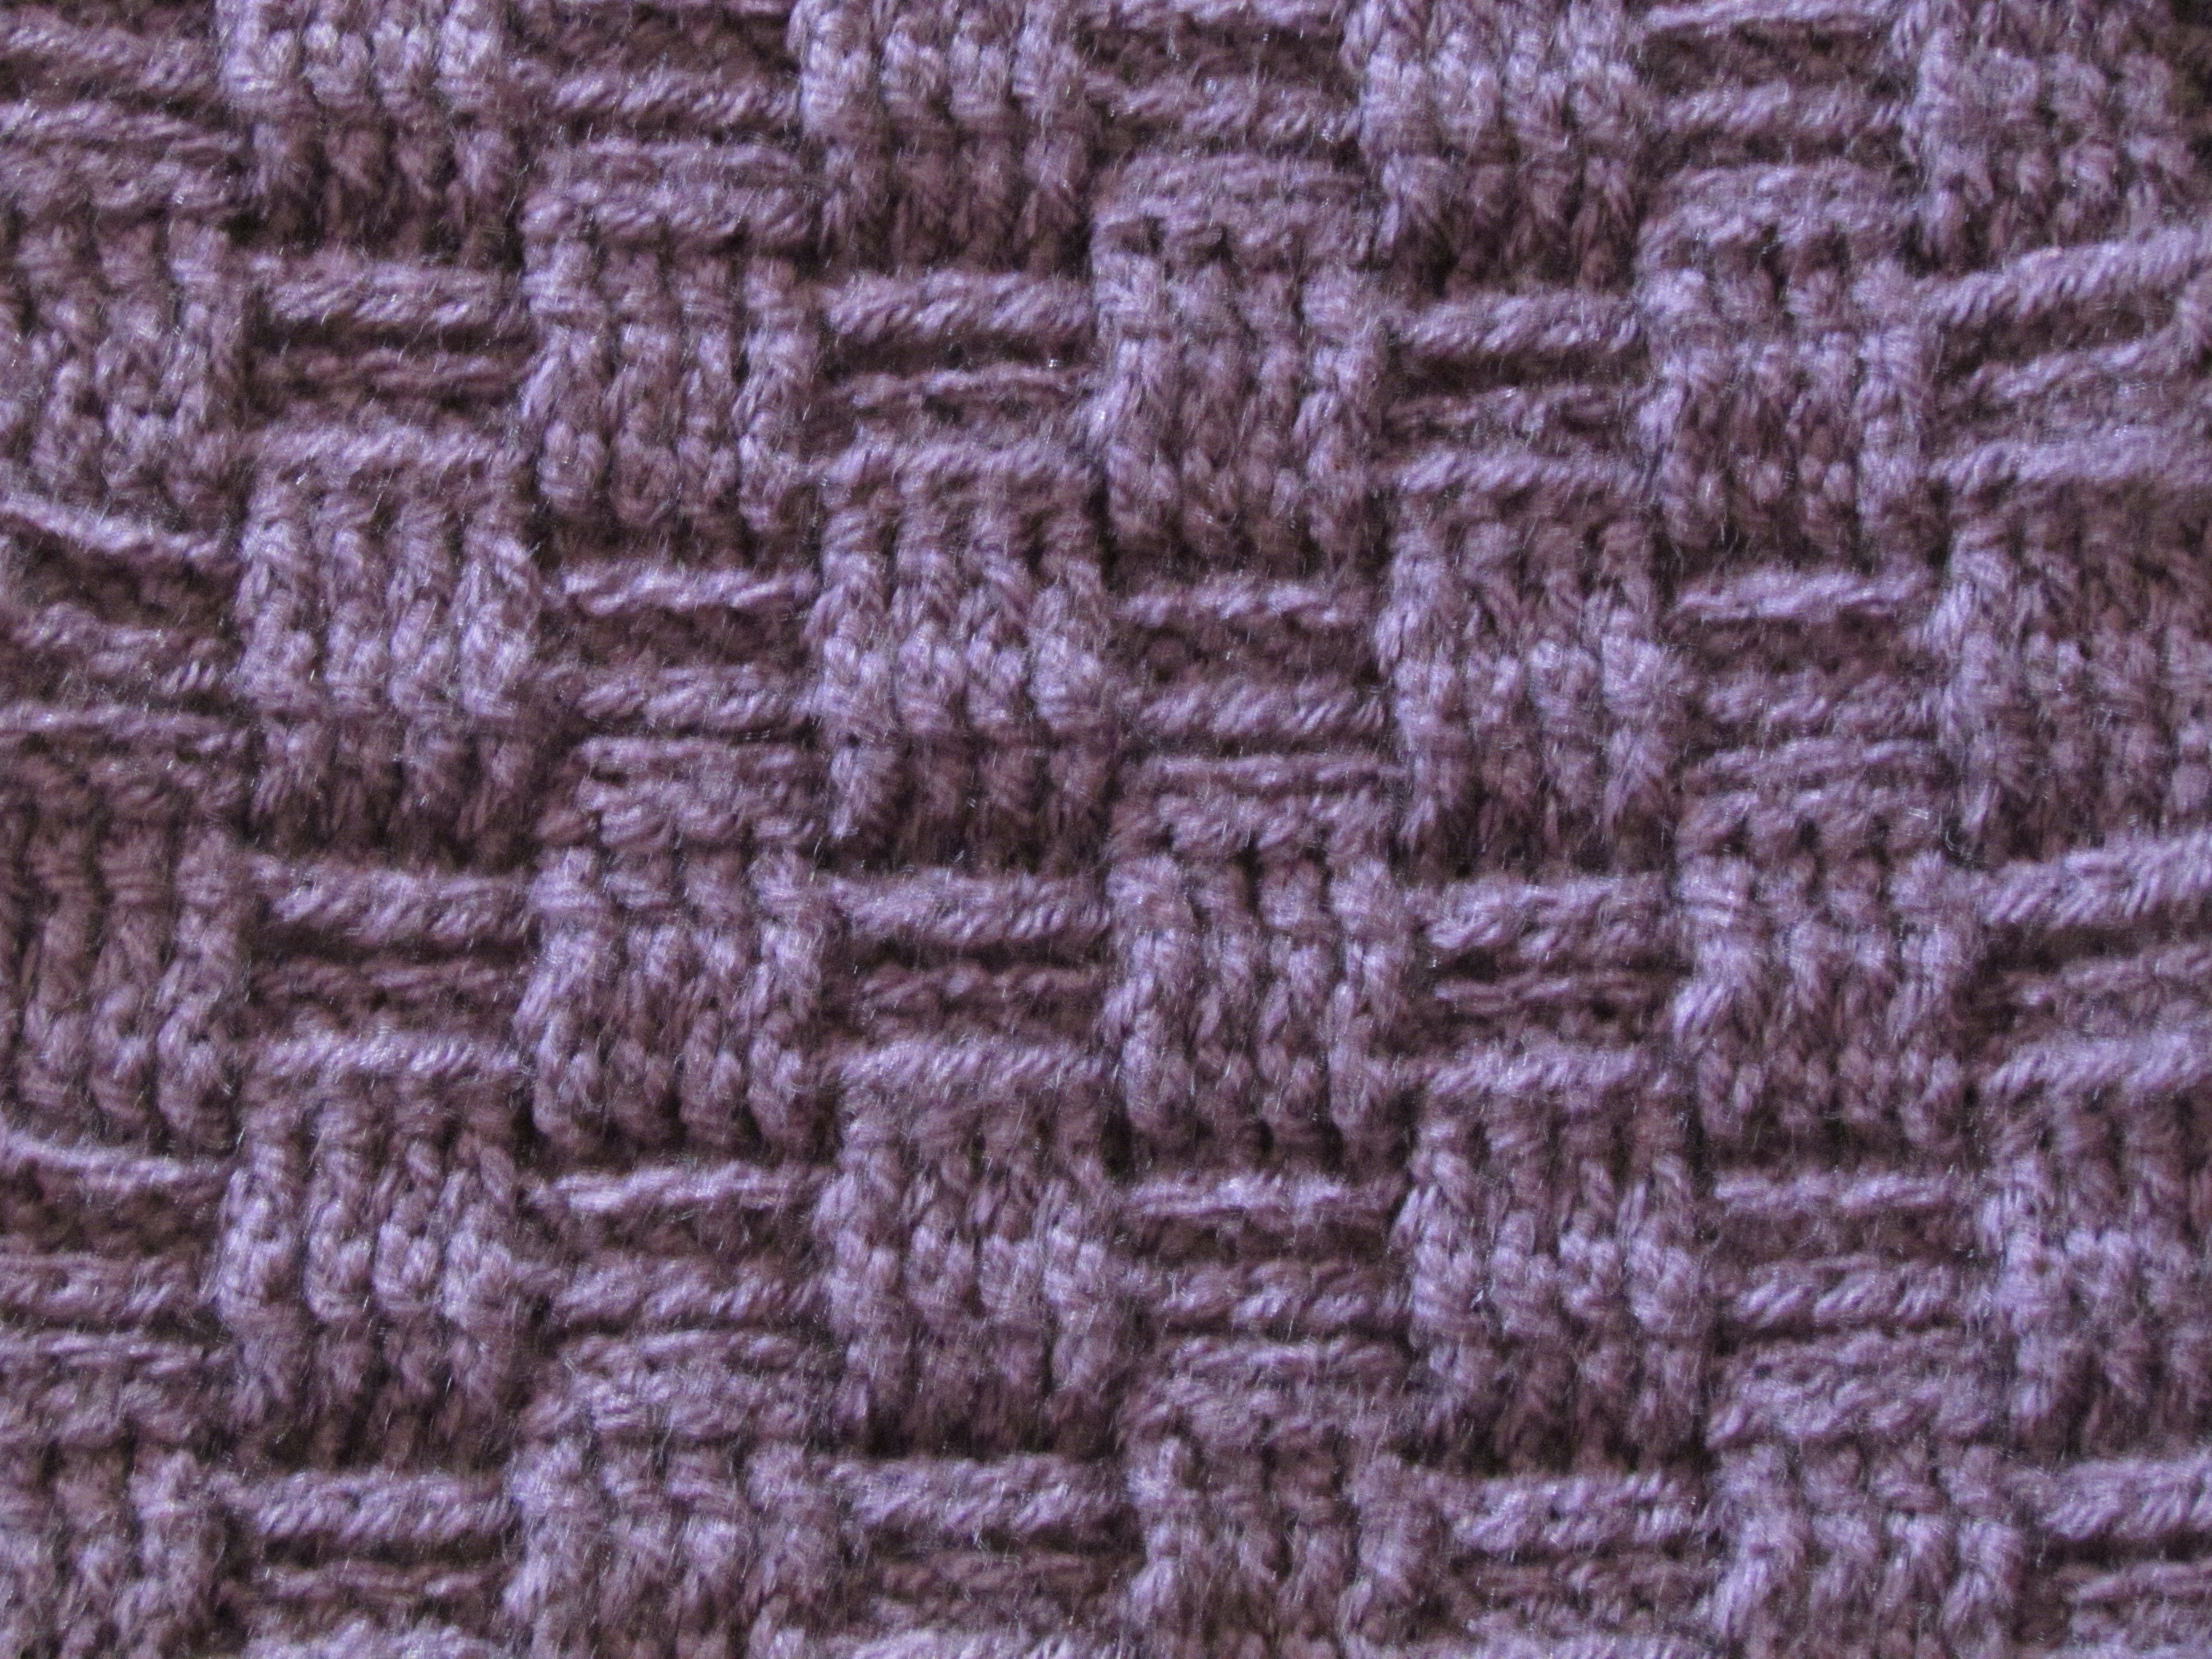 Crochet Geek - Free Instructions and Patterns: Crochet Basketweave